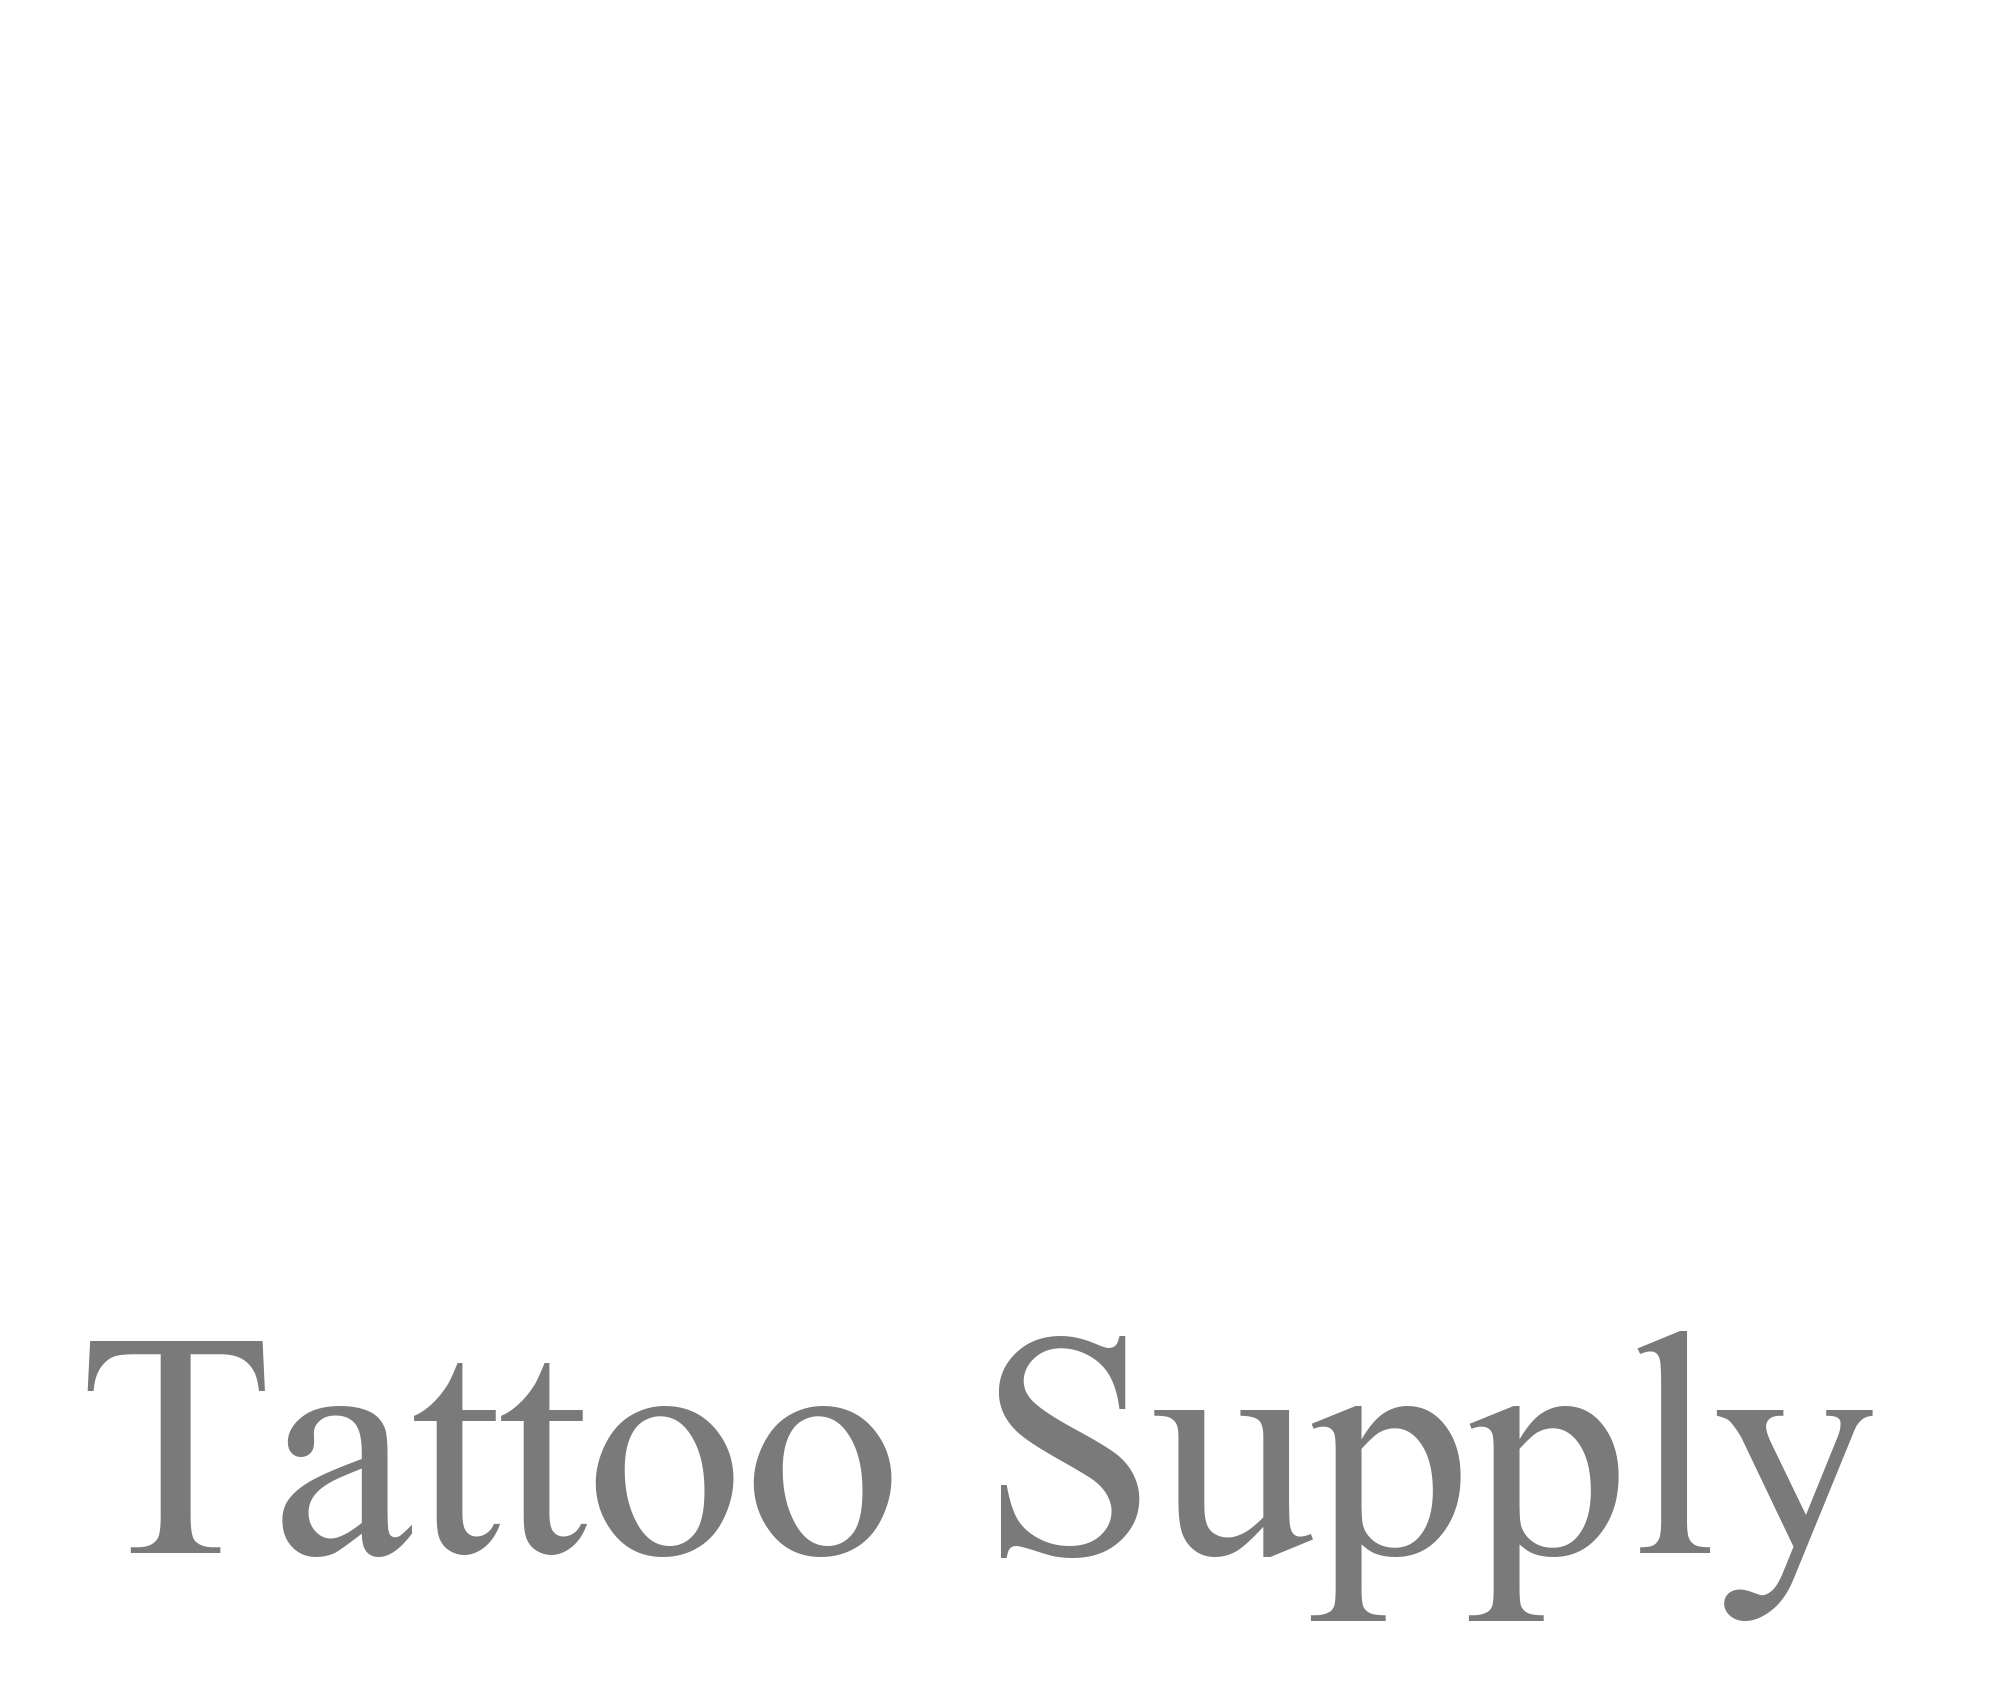 SA Tattoo Supply